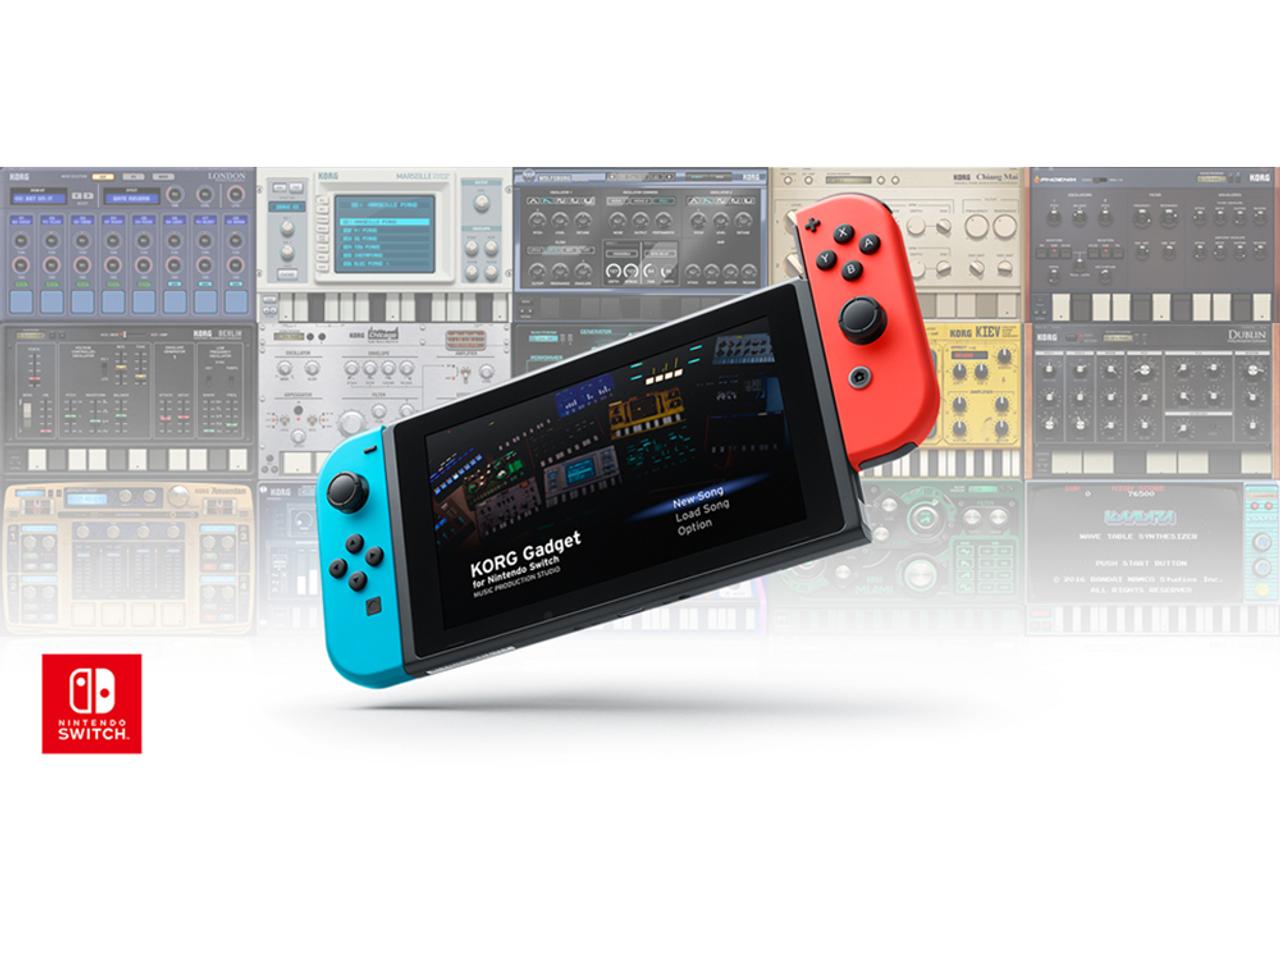 Nintendo Switchで曲作りができる｢KORG Gadget for Nintendo Switch｣が、2018年春に発売予定